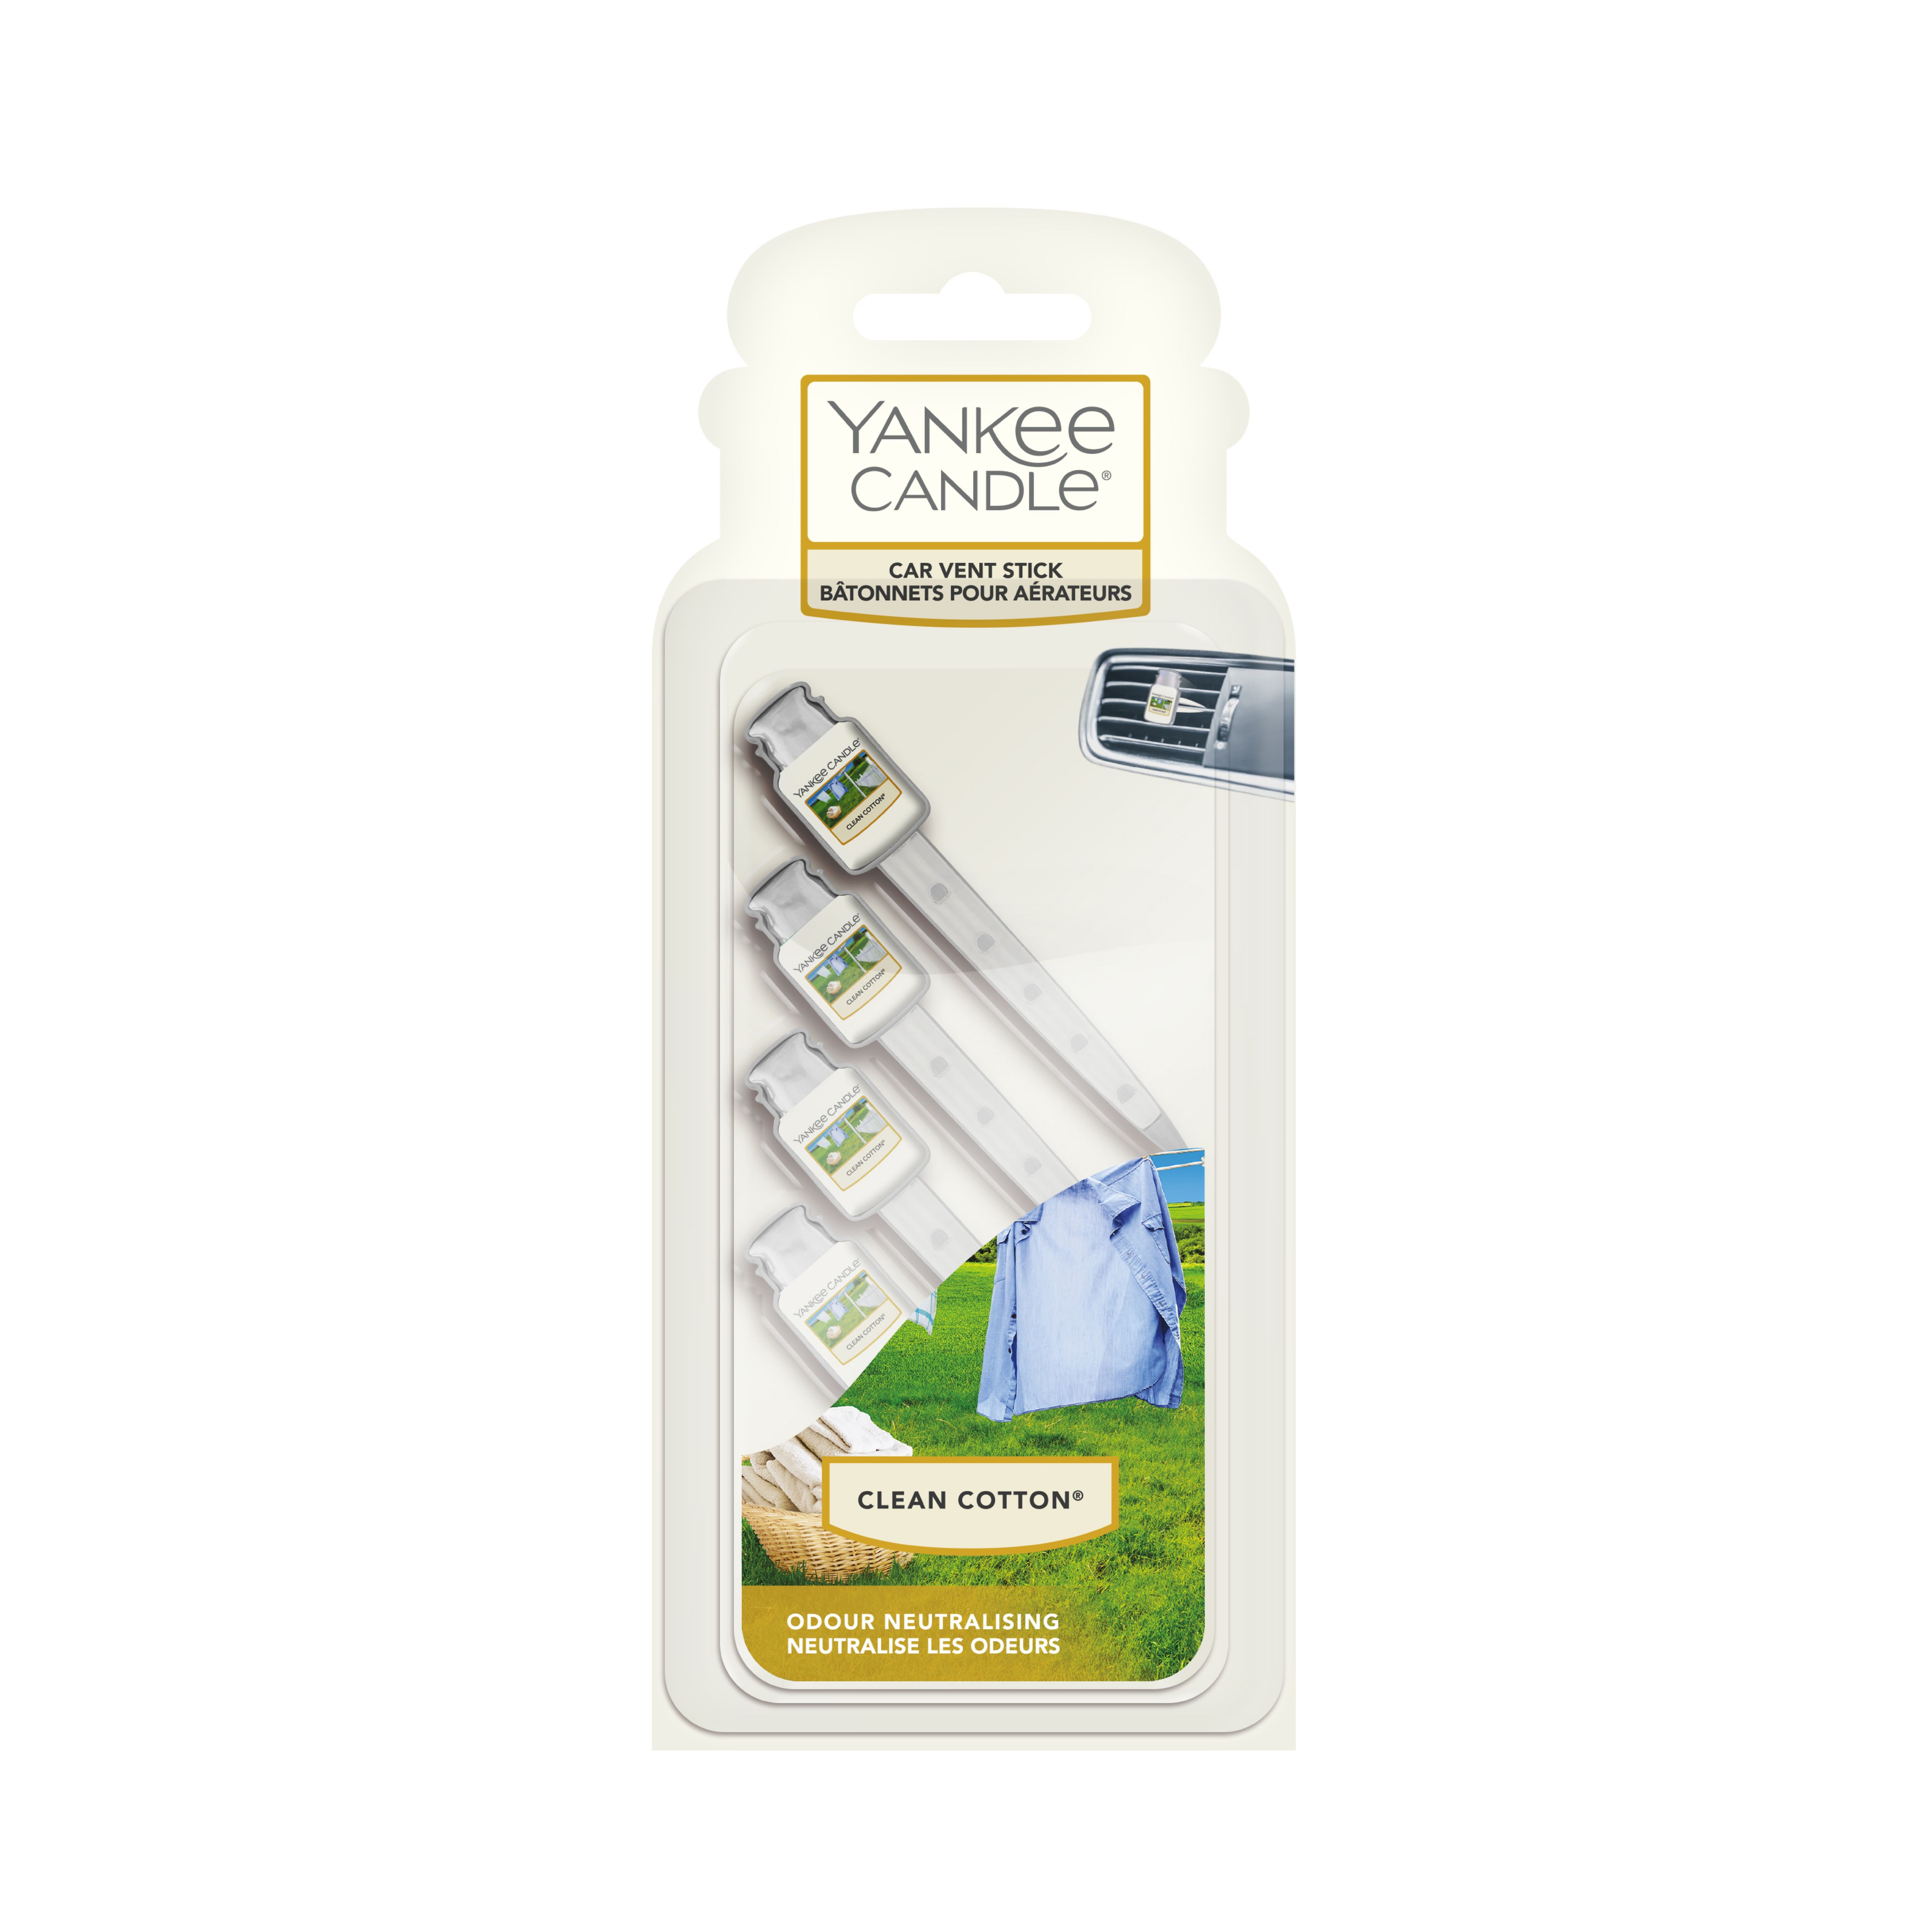 Yankee Candle Car Vent Stick Clean Cotton Air freshener, 28g